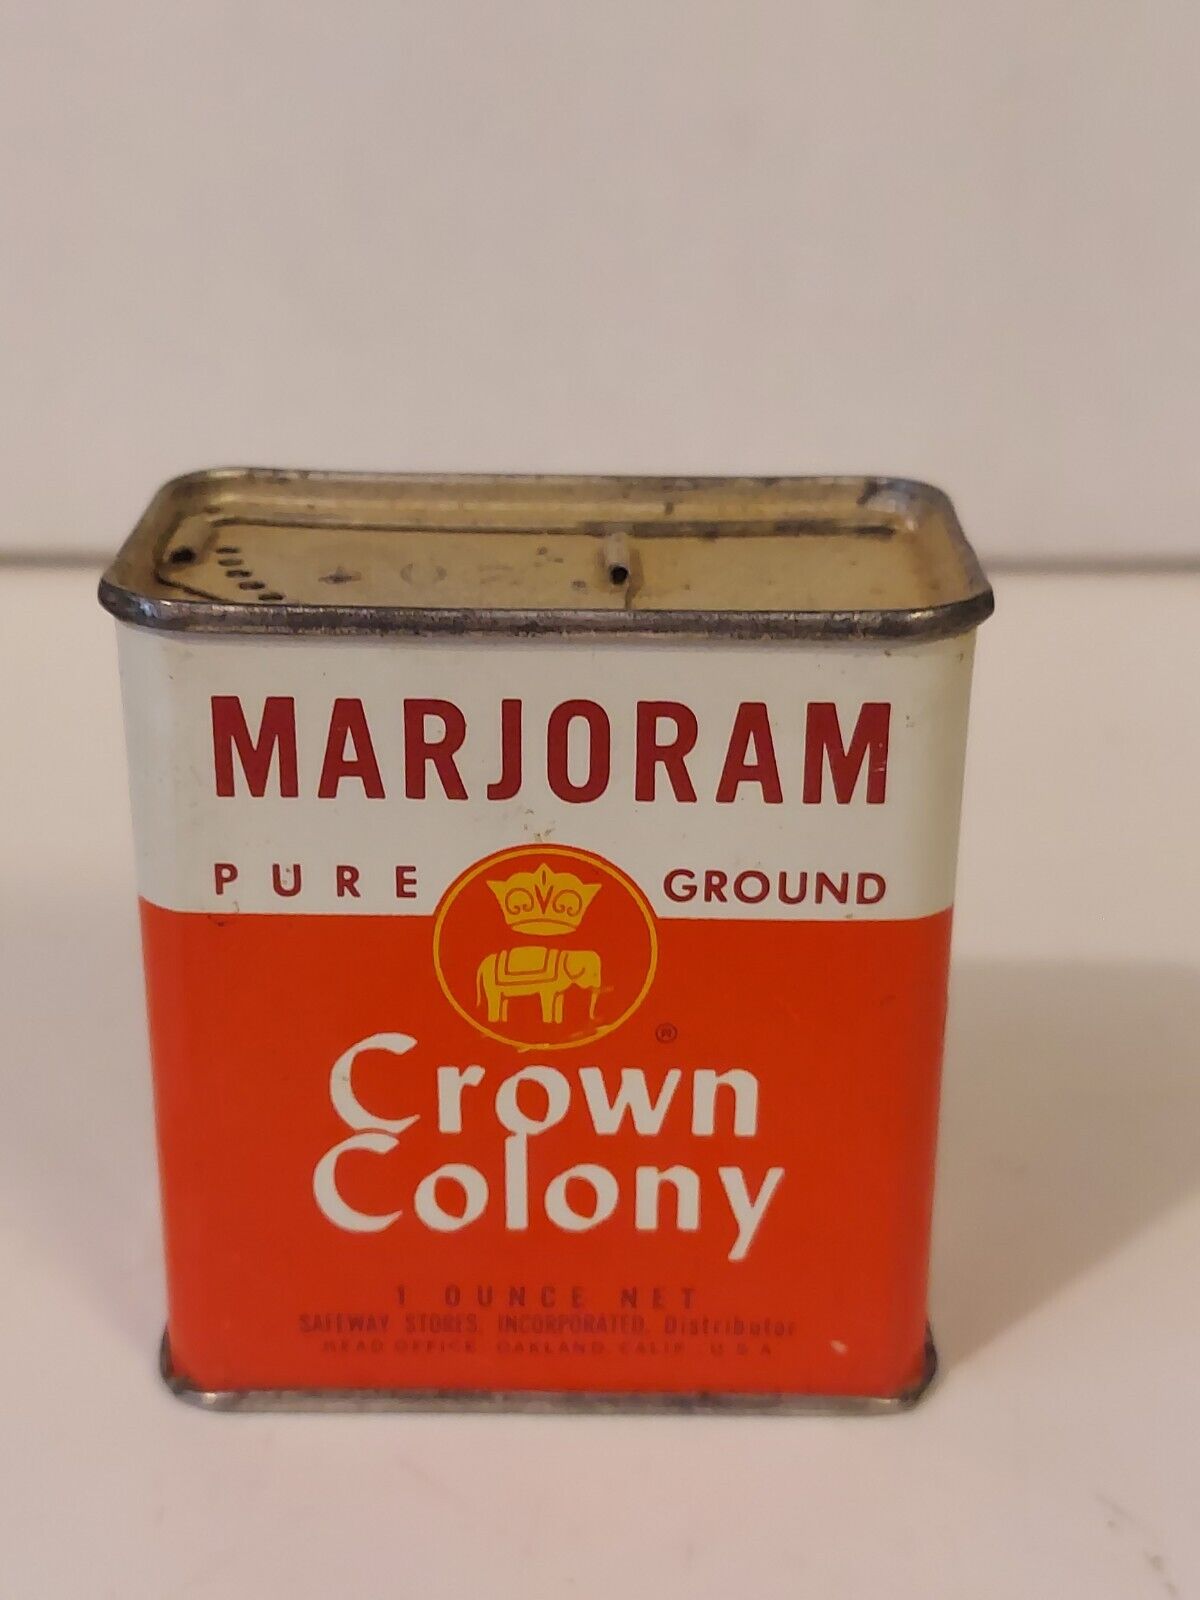 Crown Colony Brand 1961 Marjoram Spice Tin